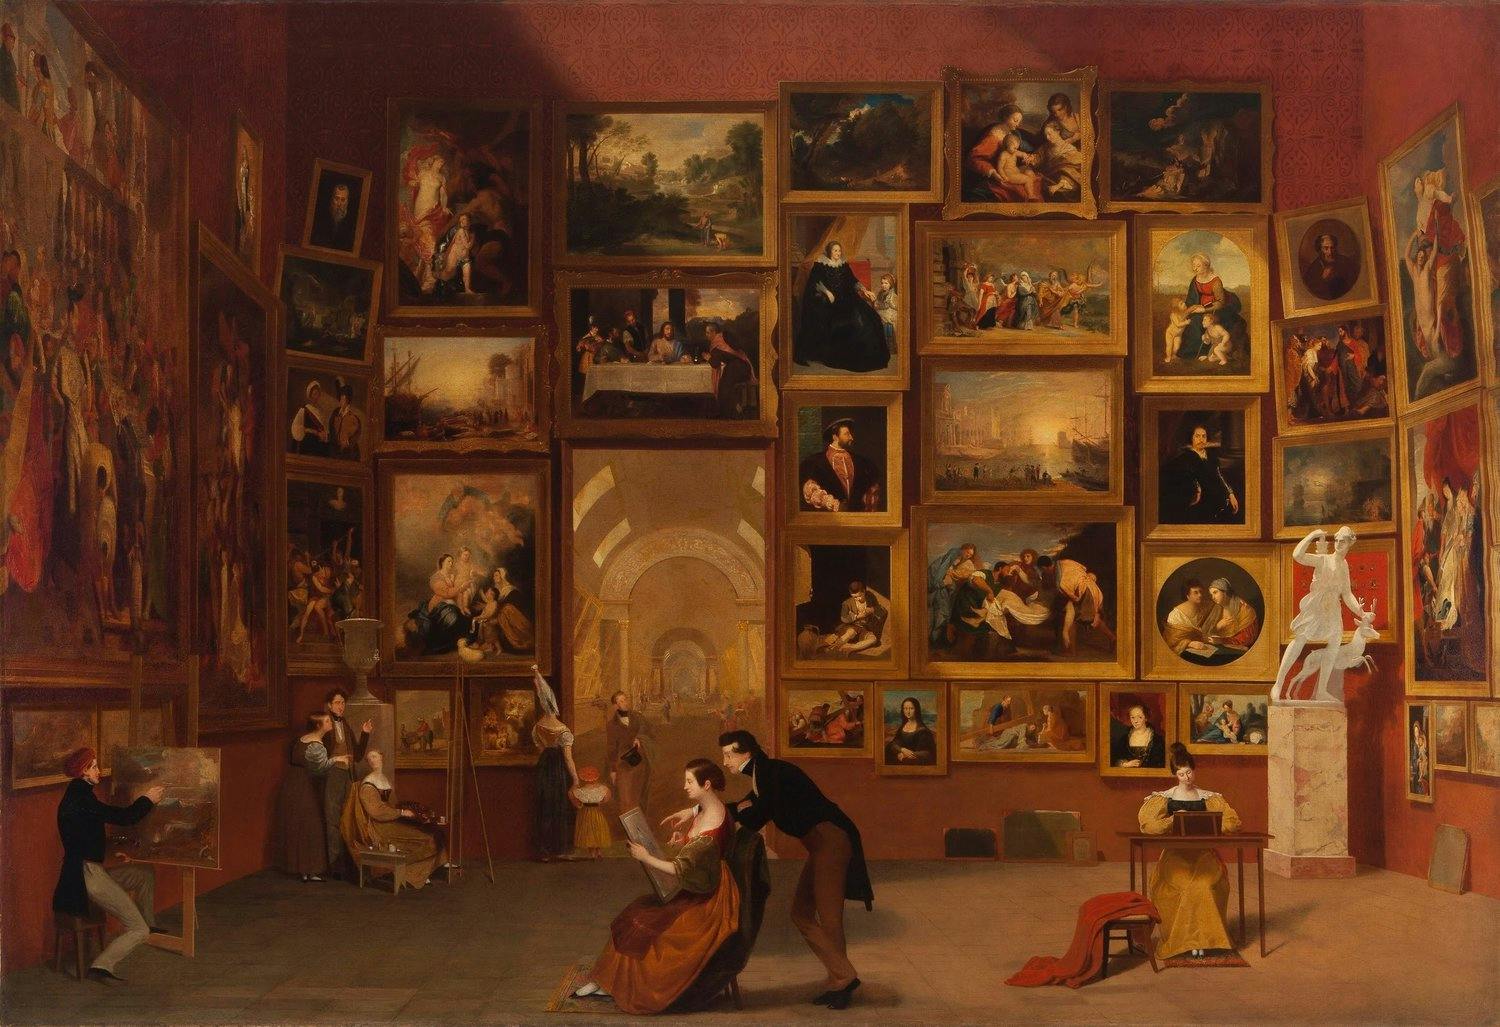 Episode #14: Samuel F. B. Morse's Gallery of the Louvre (Season 1, Episode 14)